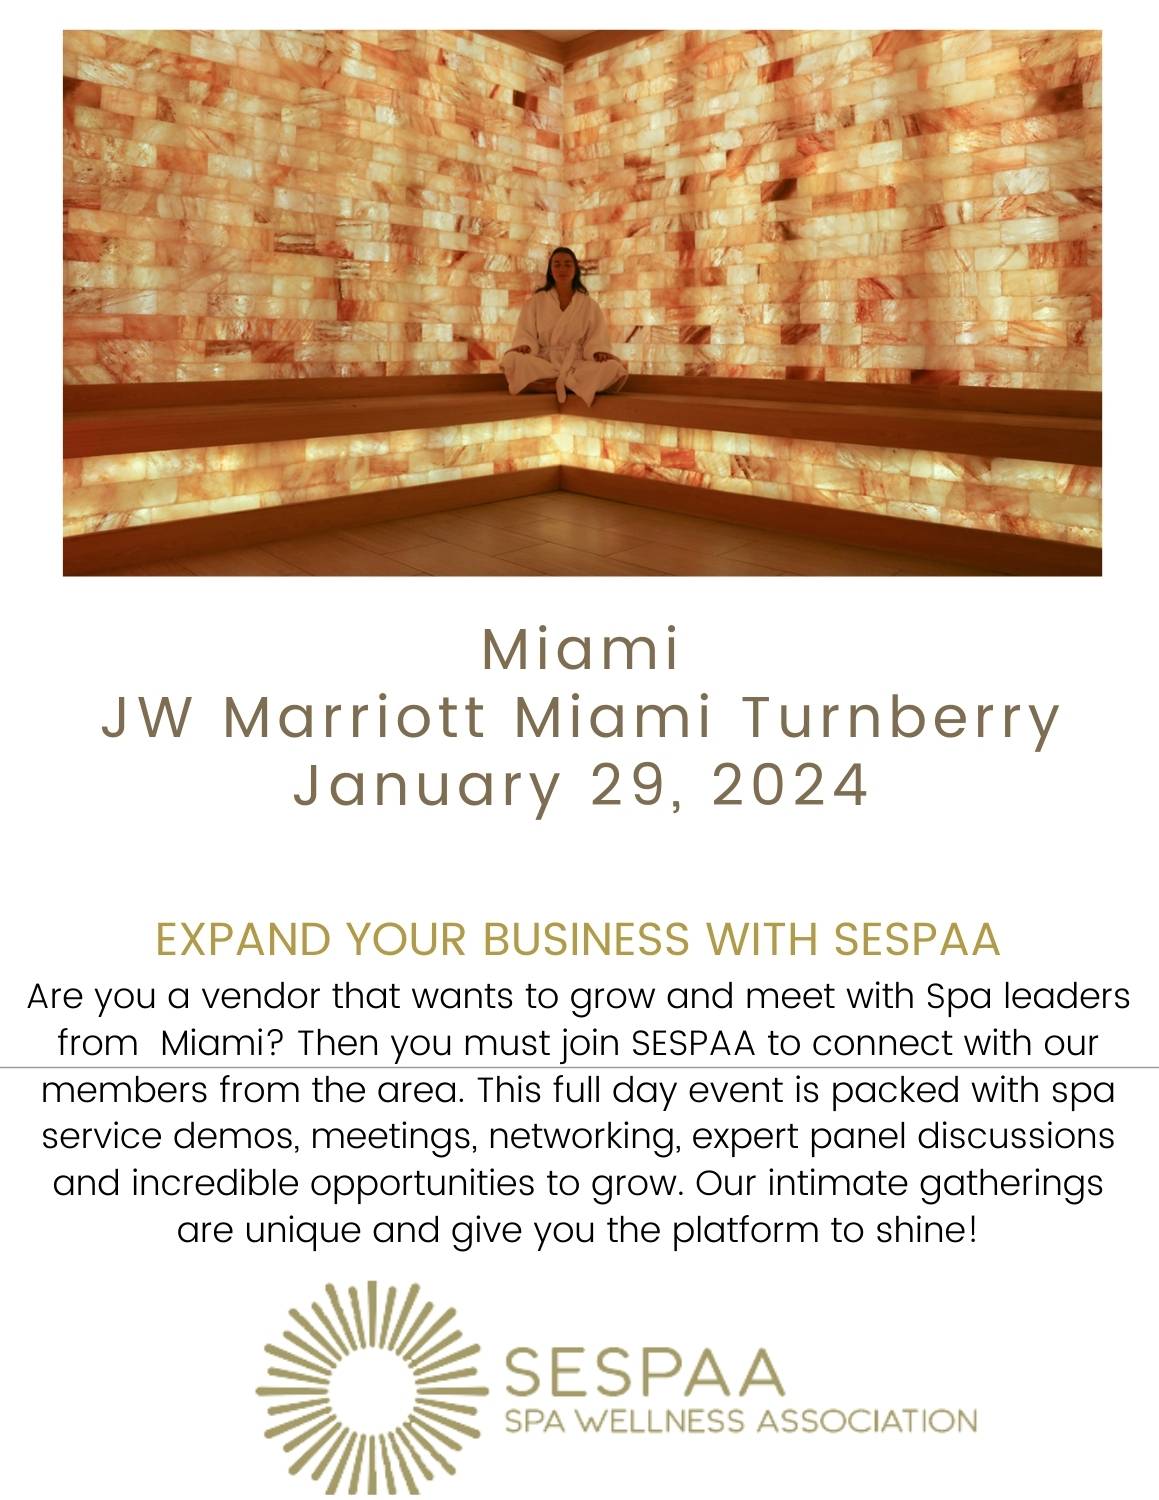 Sespaa JW Marriott Turnberry Event Janurary 29th 2024